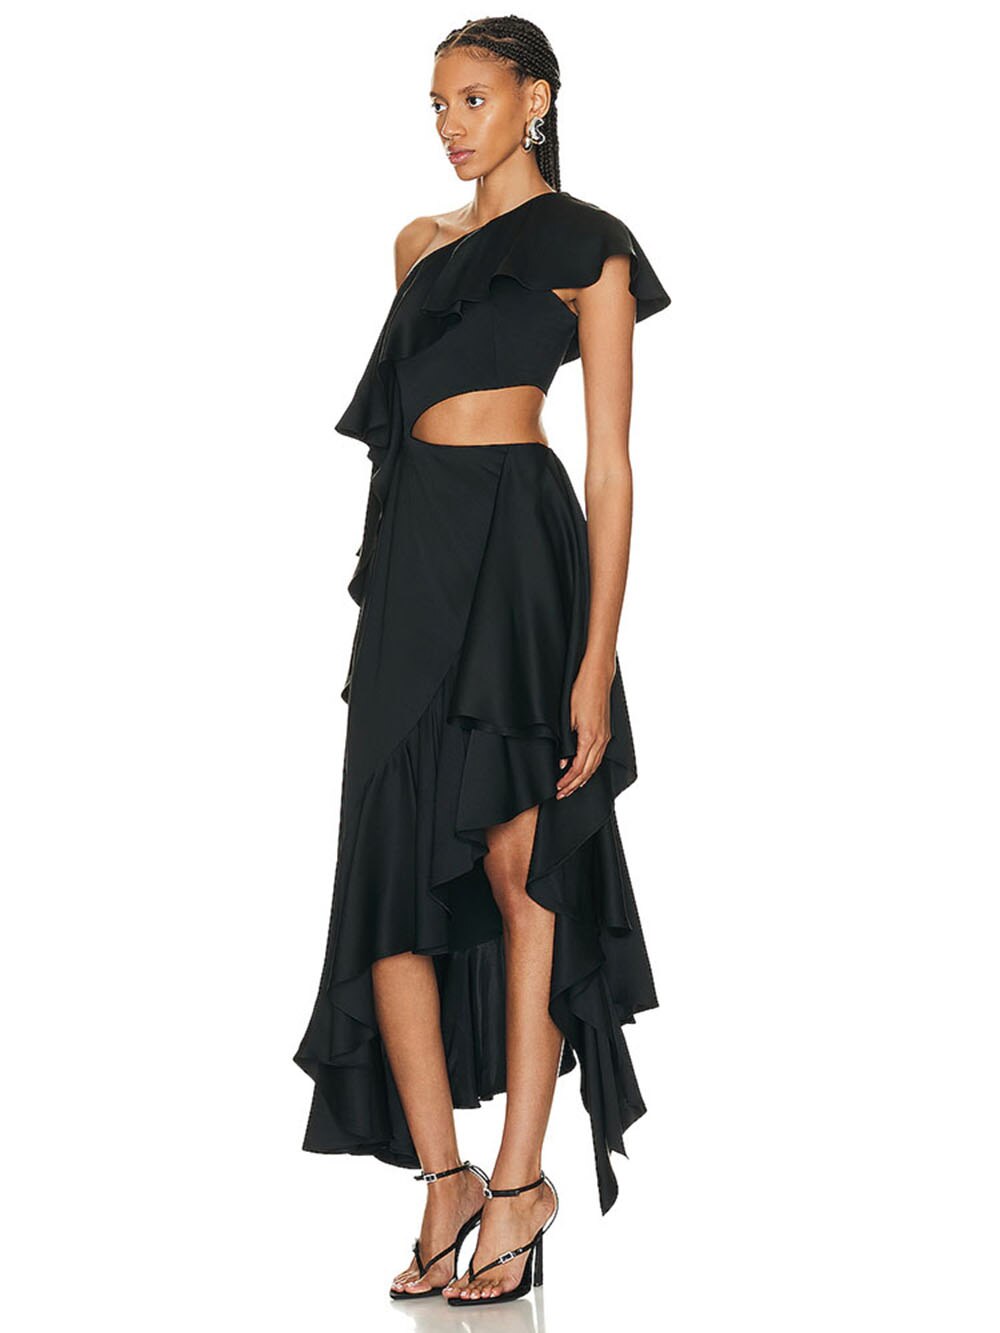 JuliaFashion-Asymmetric Ruffled One Shoulder Cutout Dress